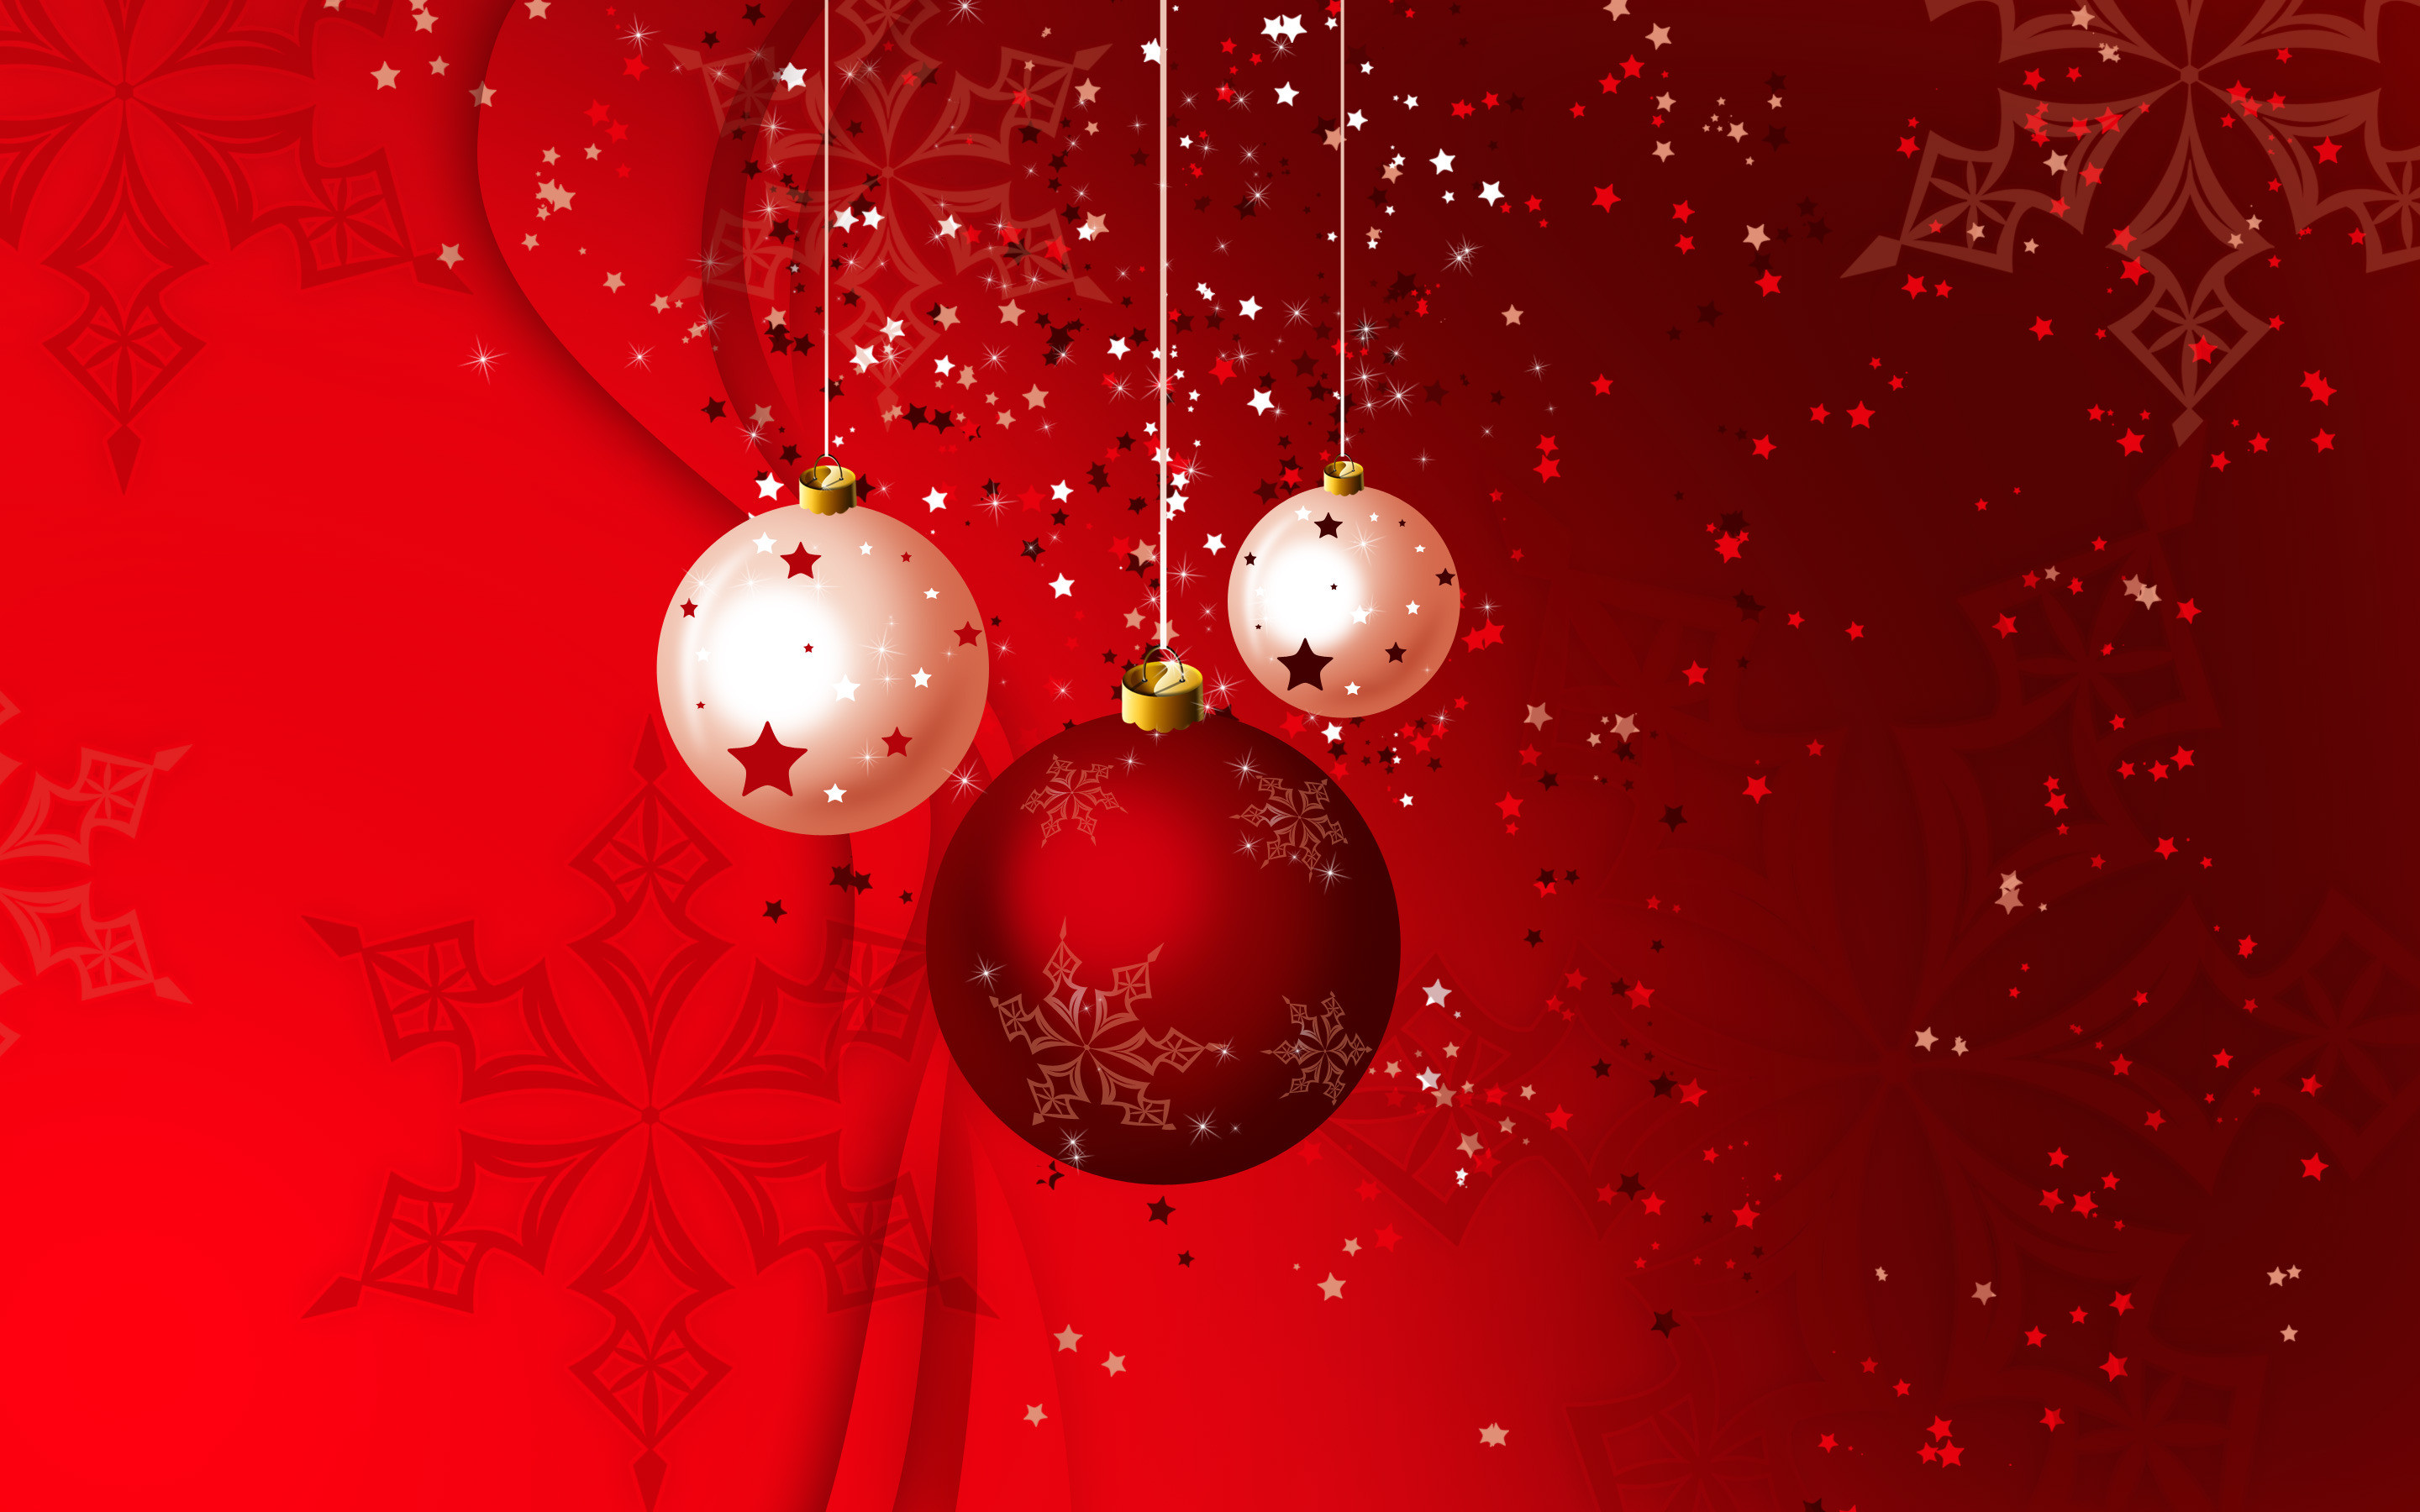 Red Christmas Wallpaper Images  Free Download on Freepik